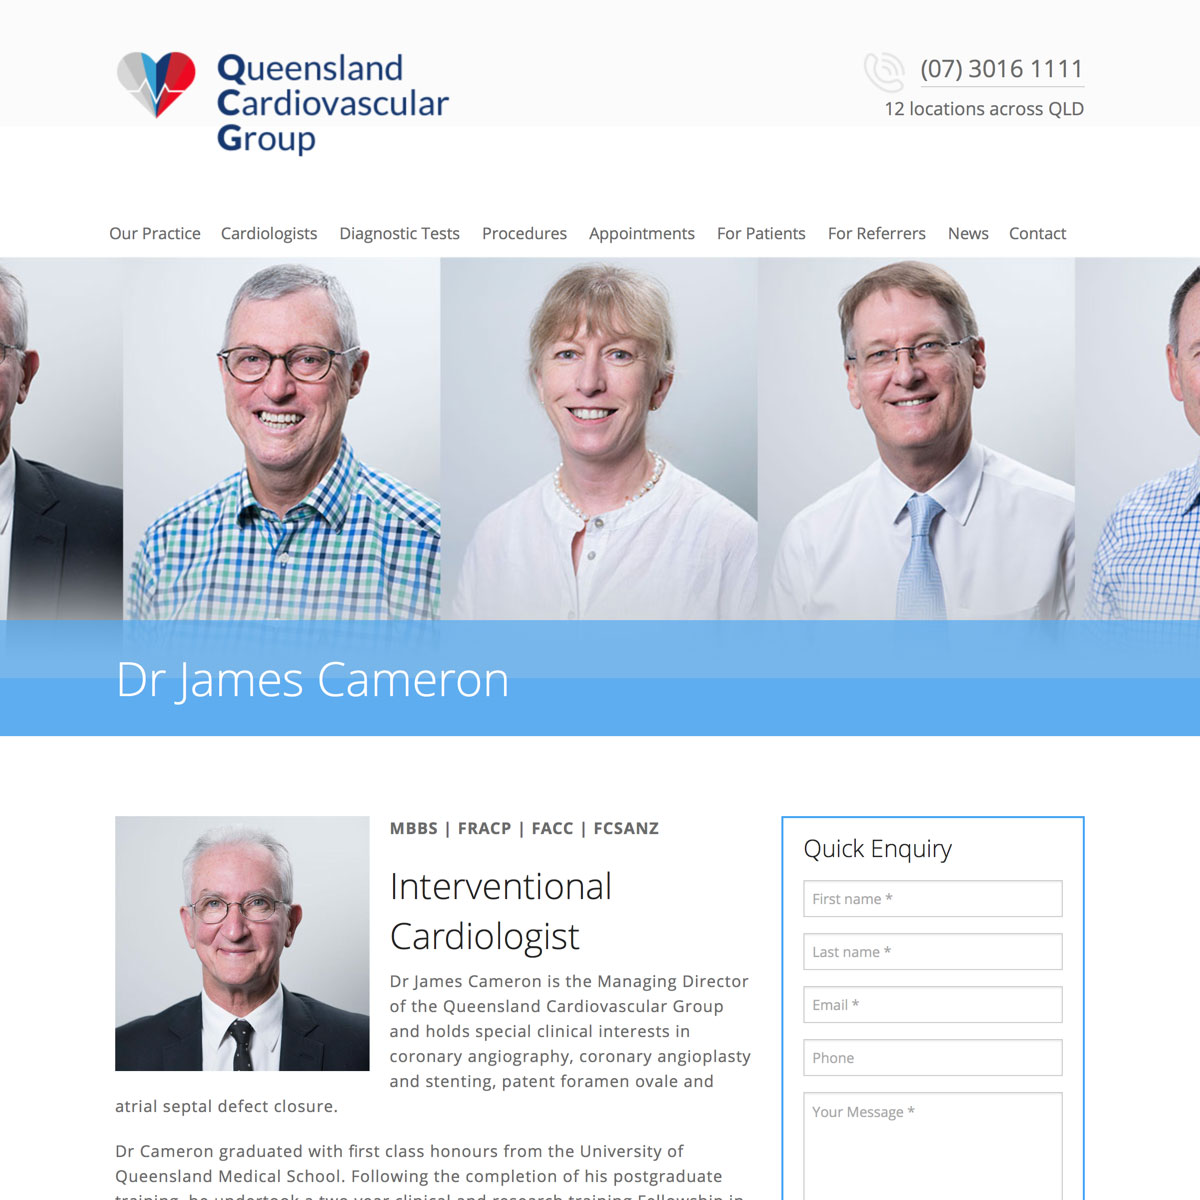 Queensland Cardiovascular Group - Cardiologist Bio